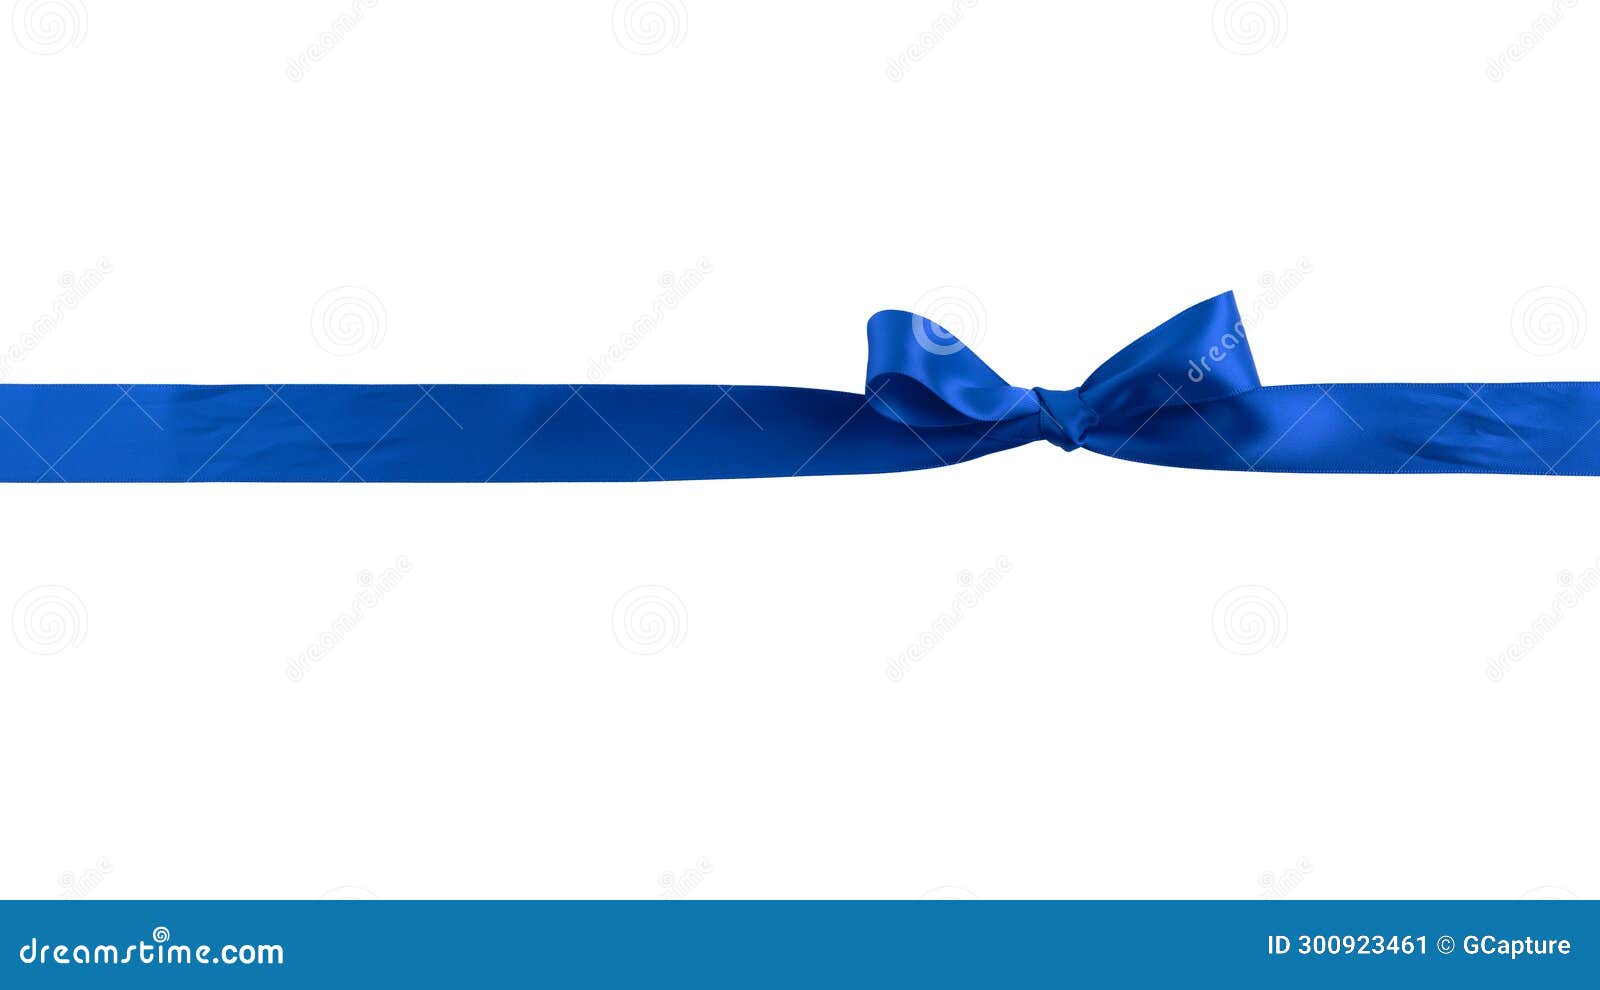 255 Blue Thin Ribbon Bow Stock Photos - Free & Royalty-Free Stock Photos  from Dreamstime